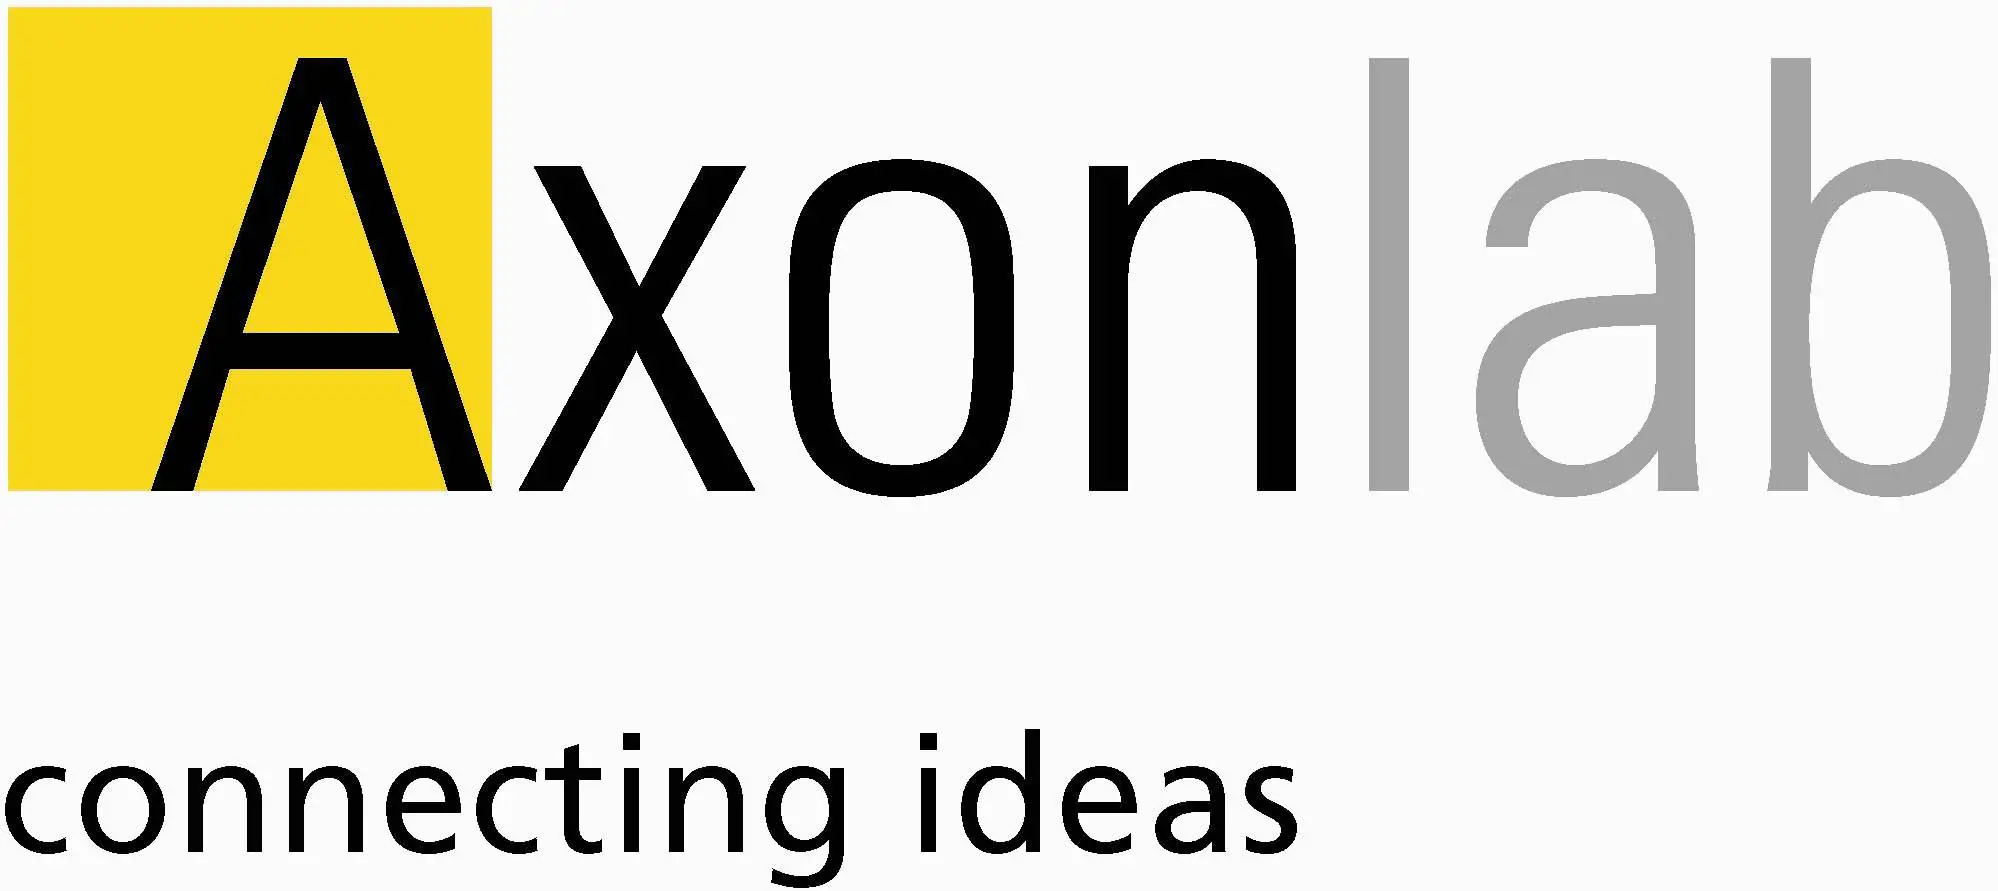 axonlab_cmyk logo.jpg